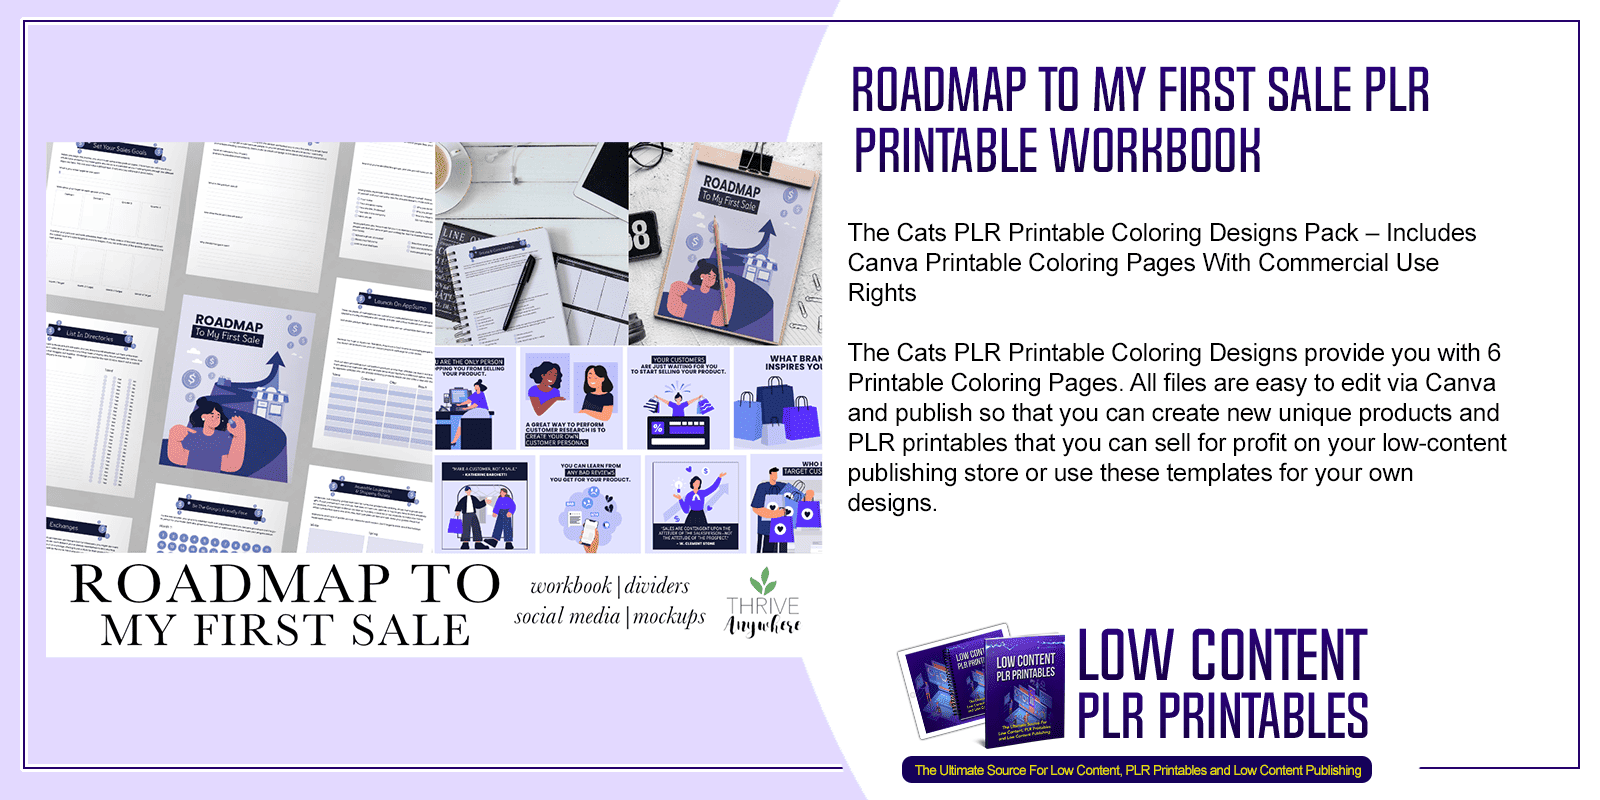 Roadmap To My First Sale PLR Printable Workbook